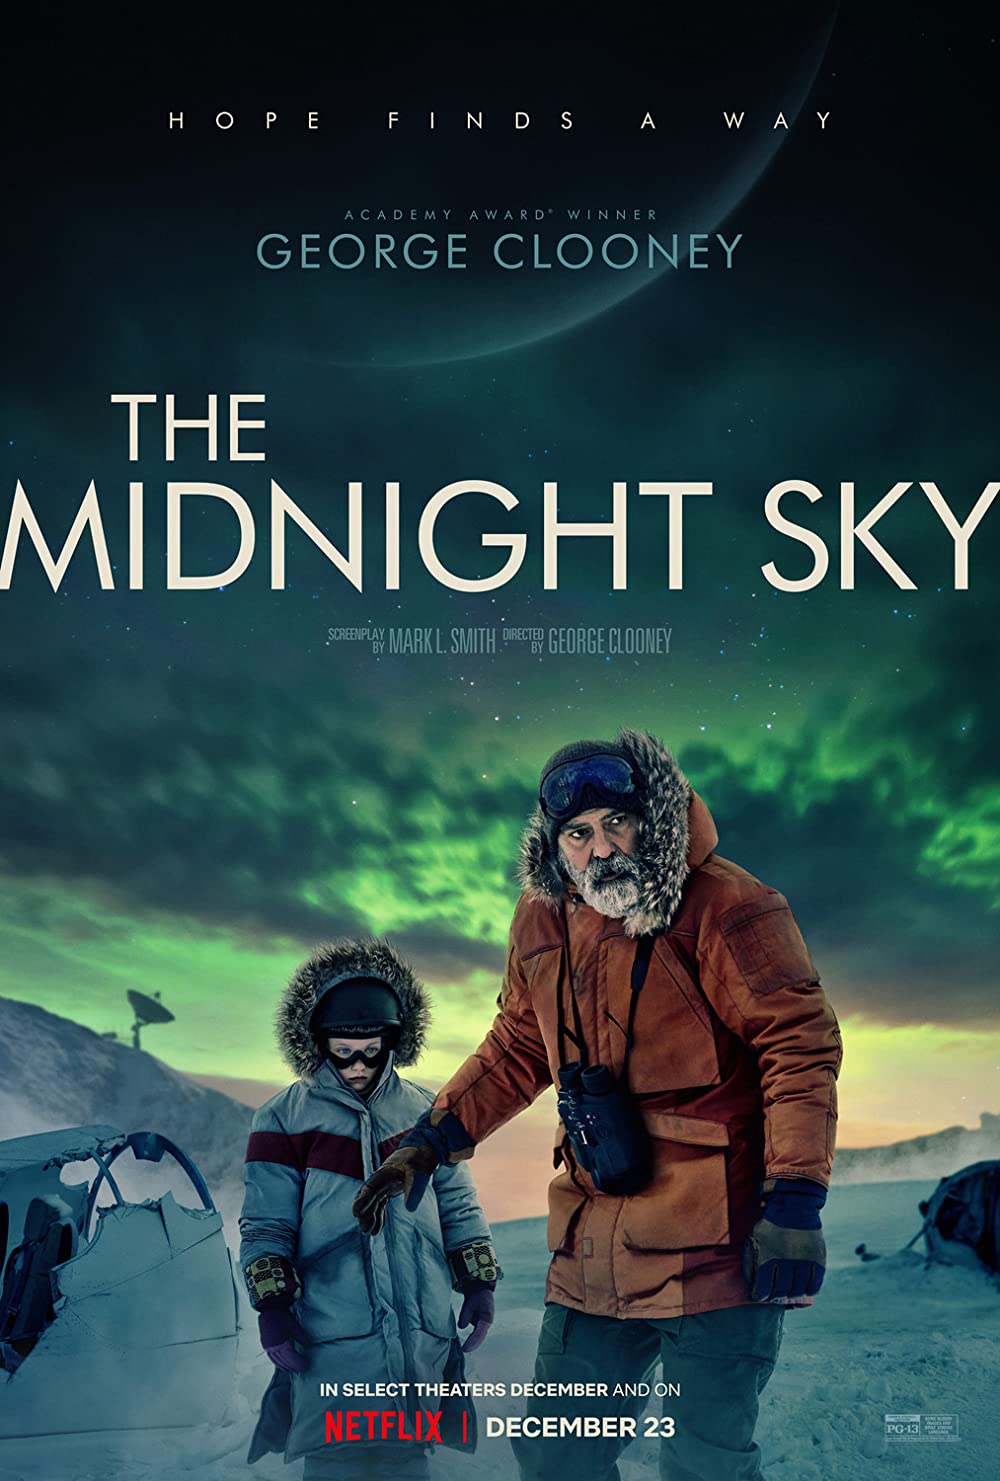 Filmbeschreibung zu The Midnight Sky